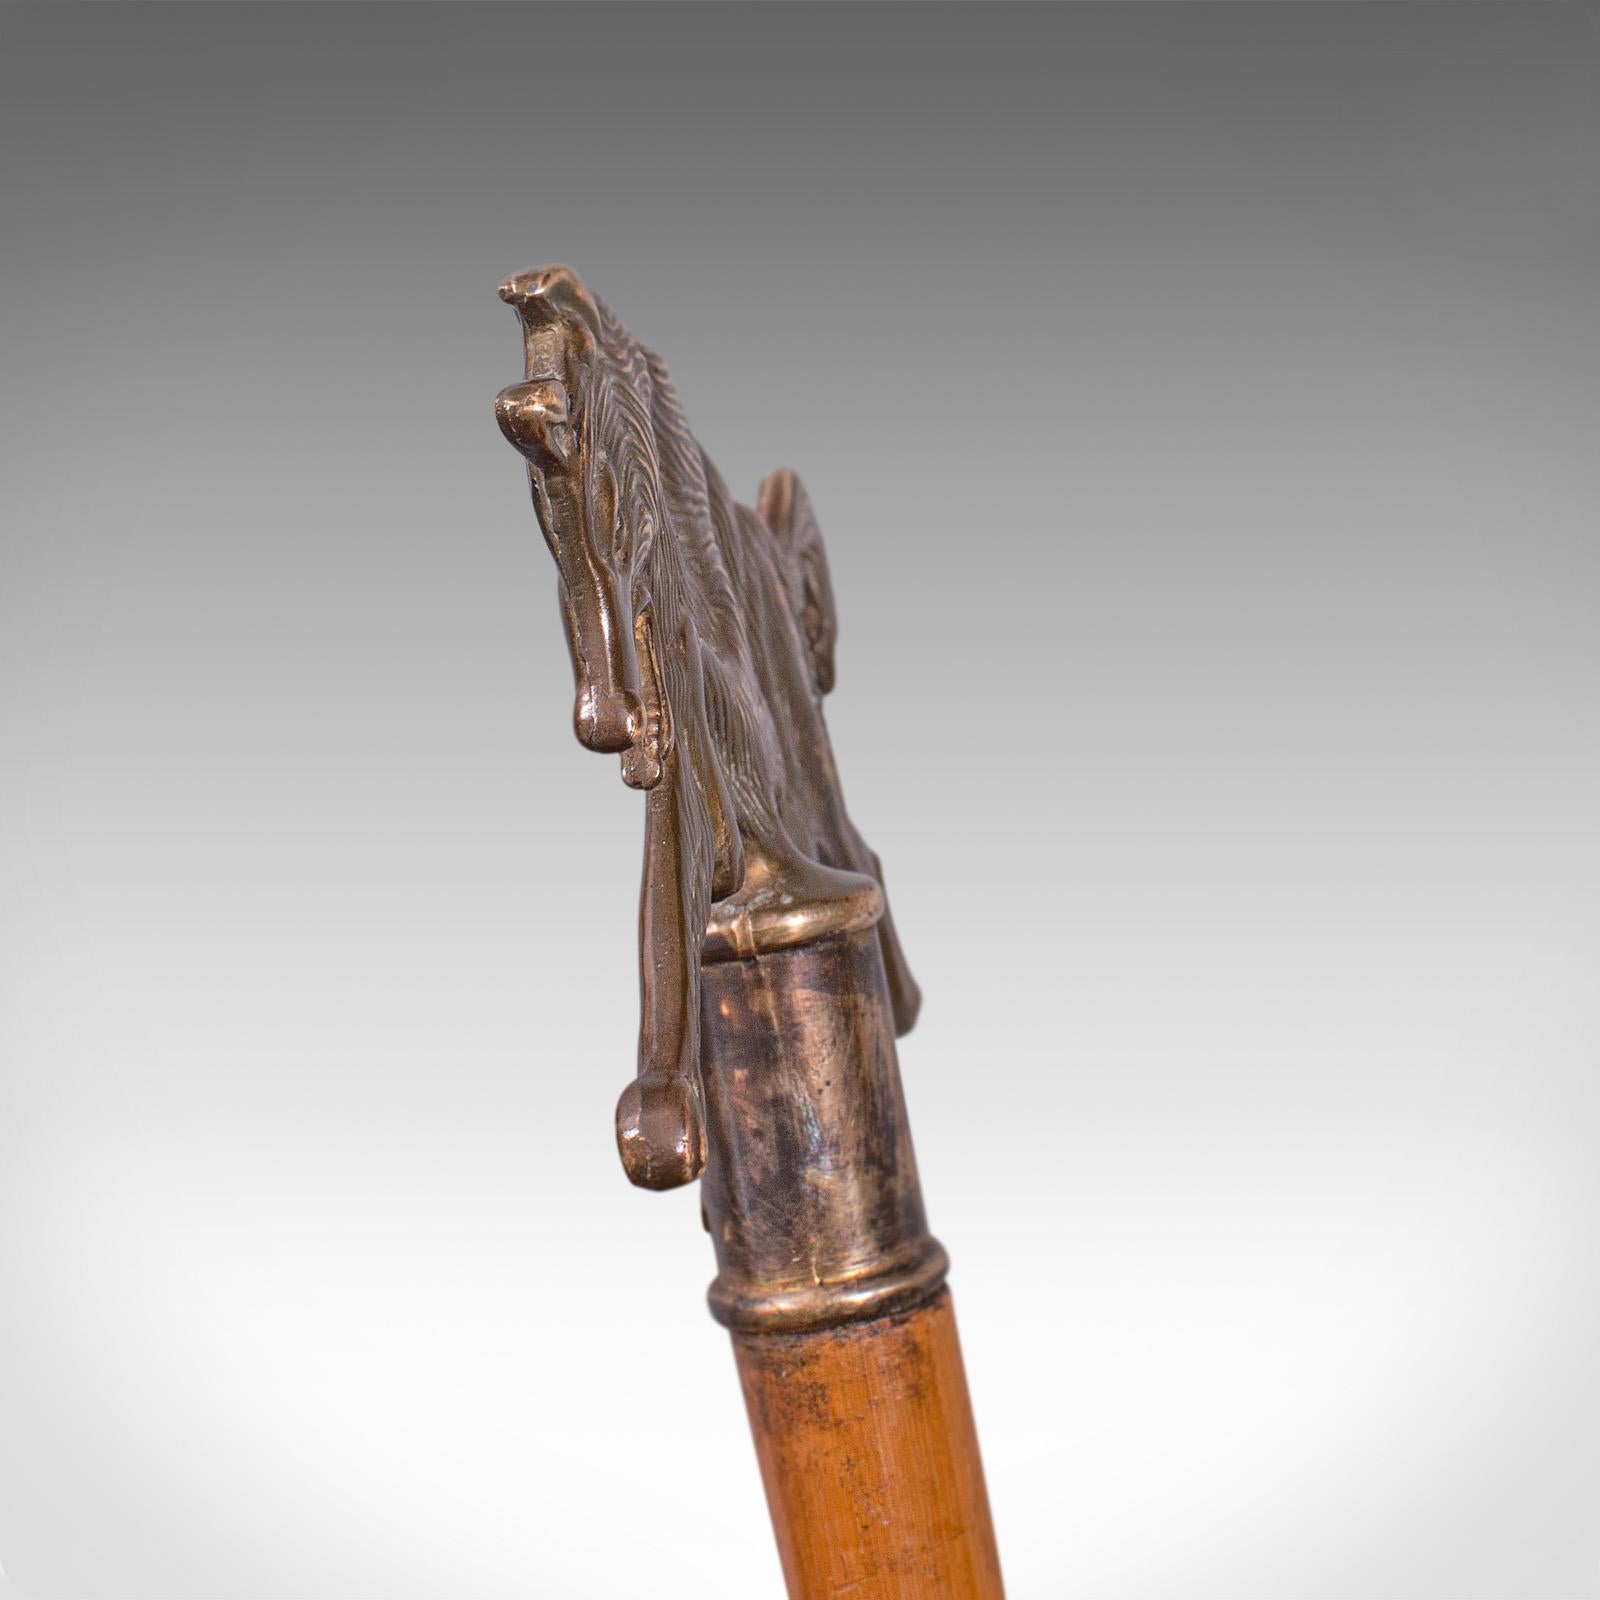 Bentwood Antique Gentleman's Walking Stick, German, Cane, Black Forest, Edwardian, C.1910